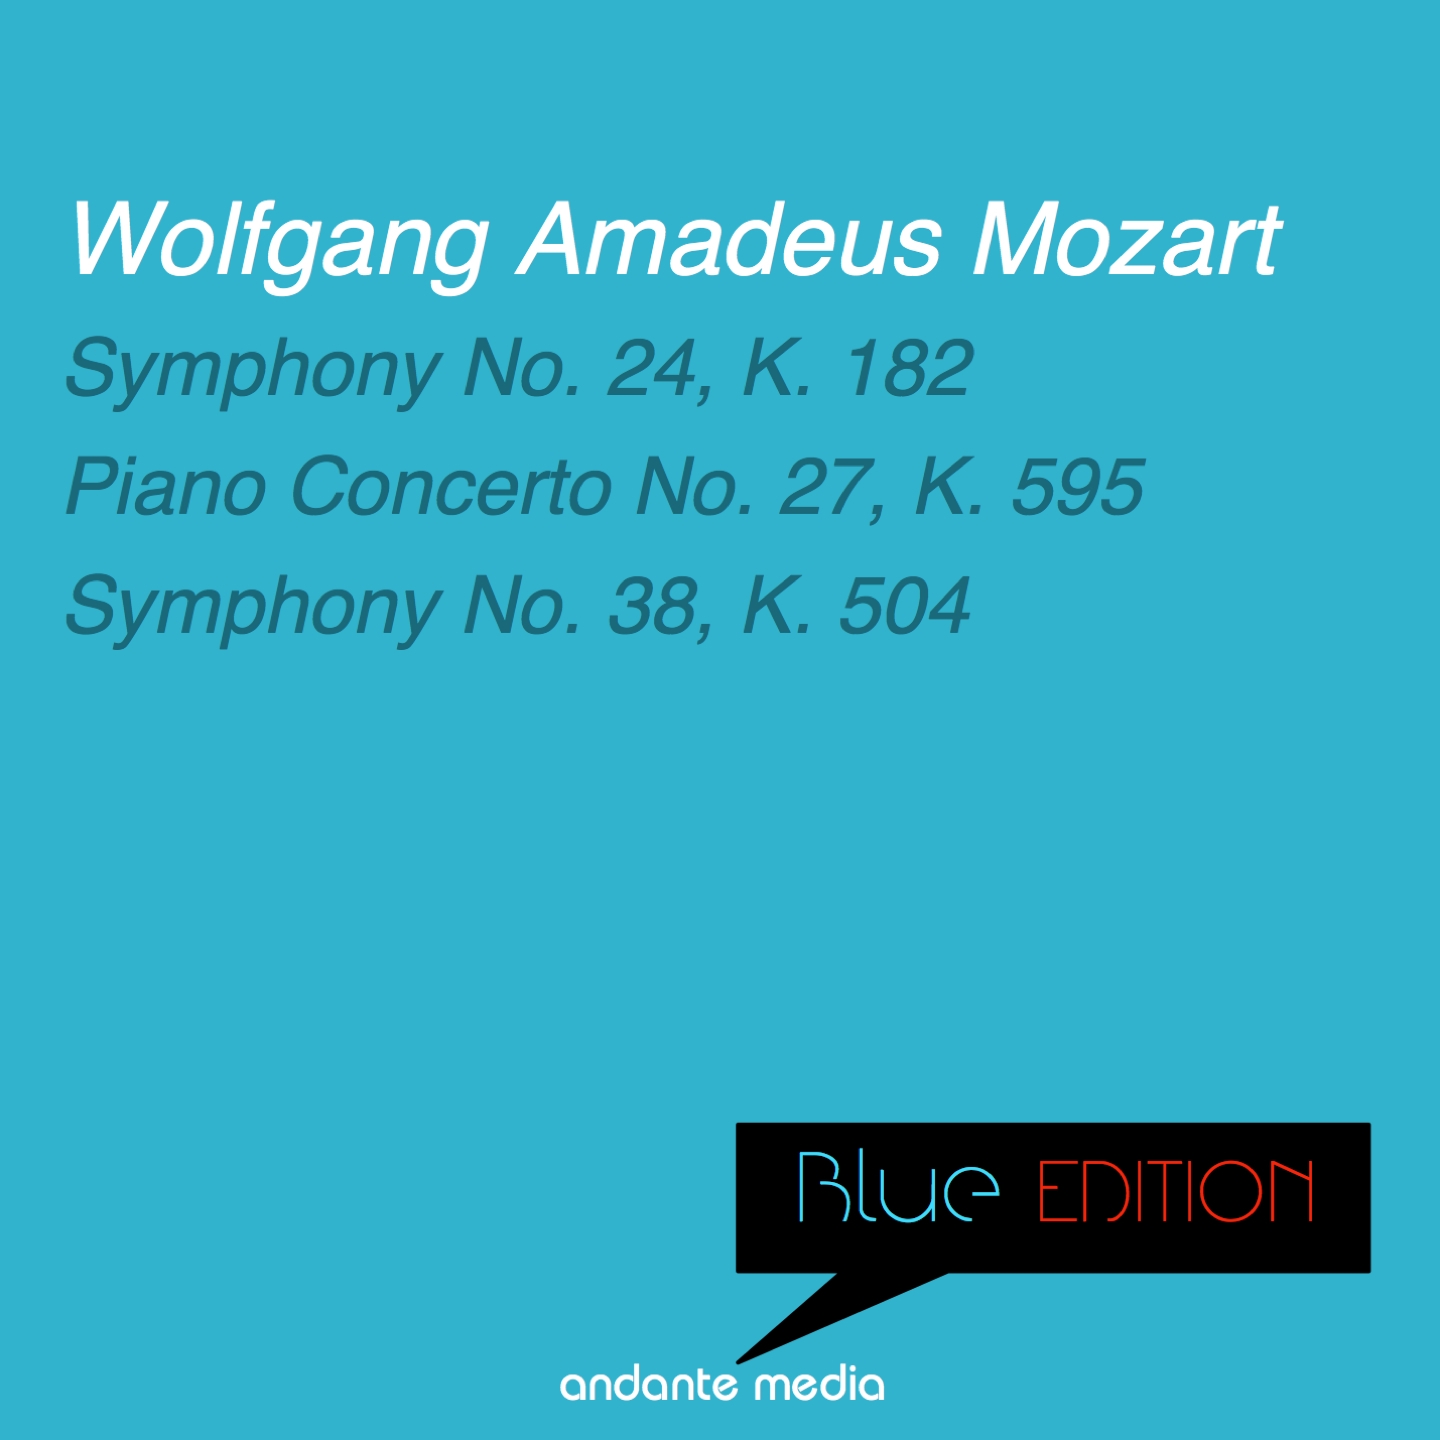 Piano Concerto No. 27 in B-Flat Major, K. 595: III. Allegro